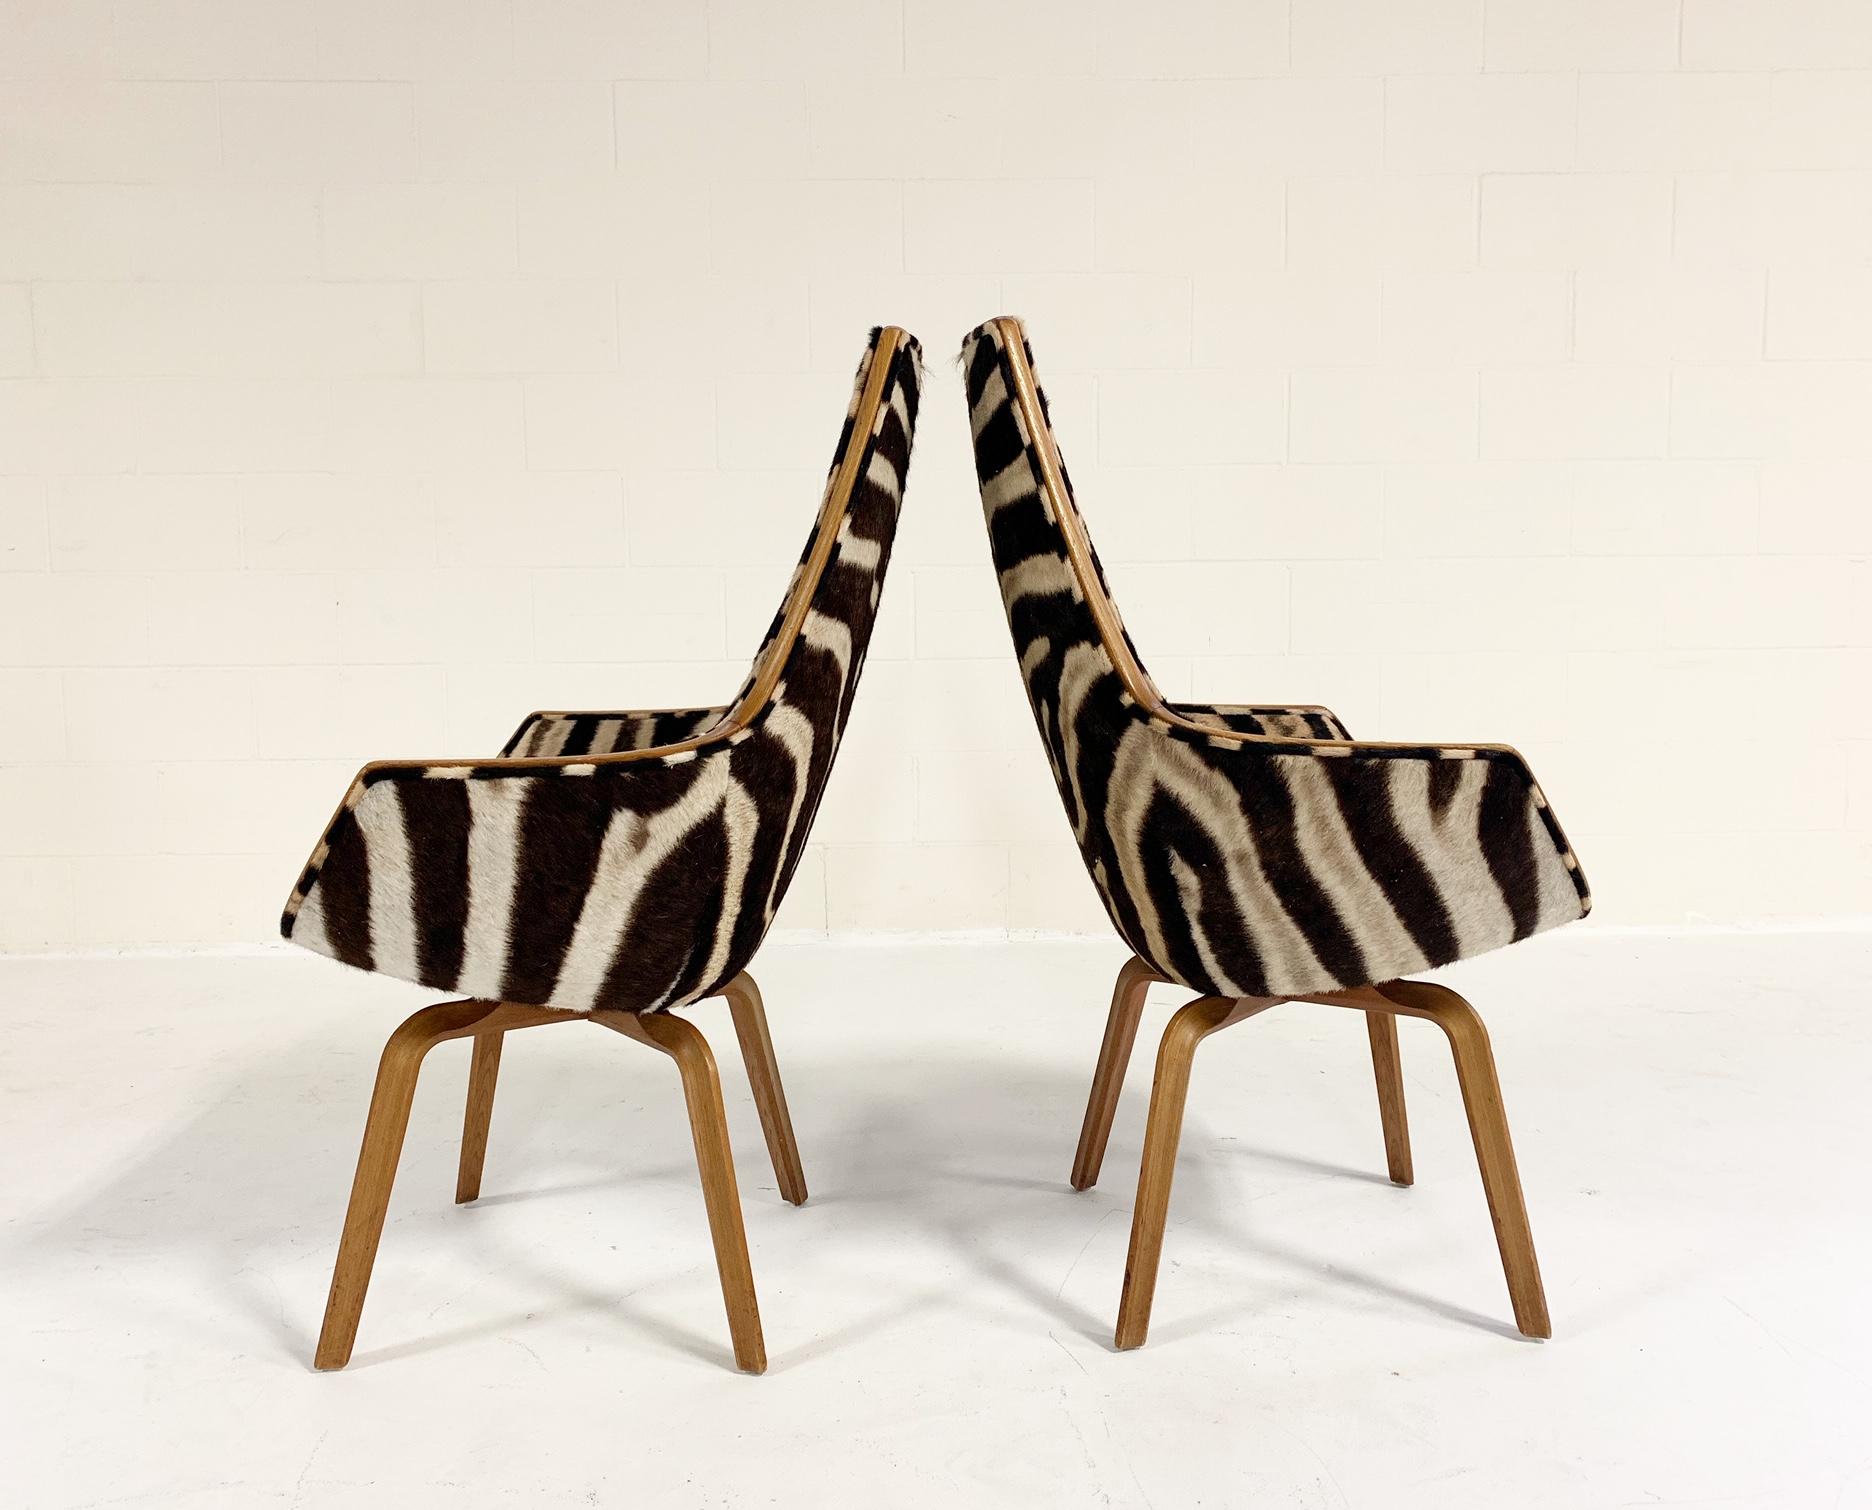 Scandinavian Modern Rare Arne Jacobsen for Fritz Hansen Giraffe Chairs Restored in Zebra Hide, Pair